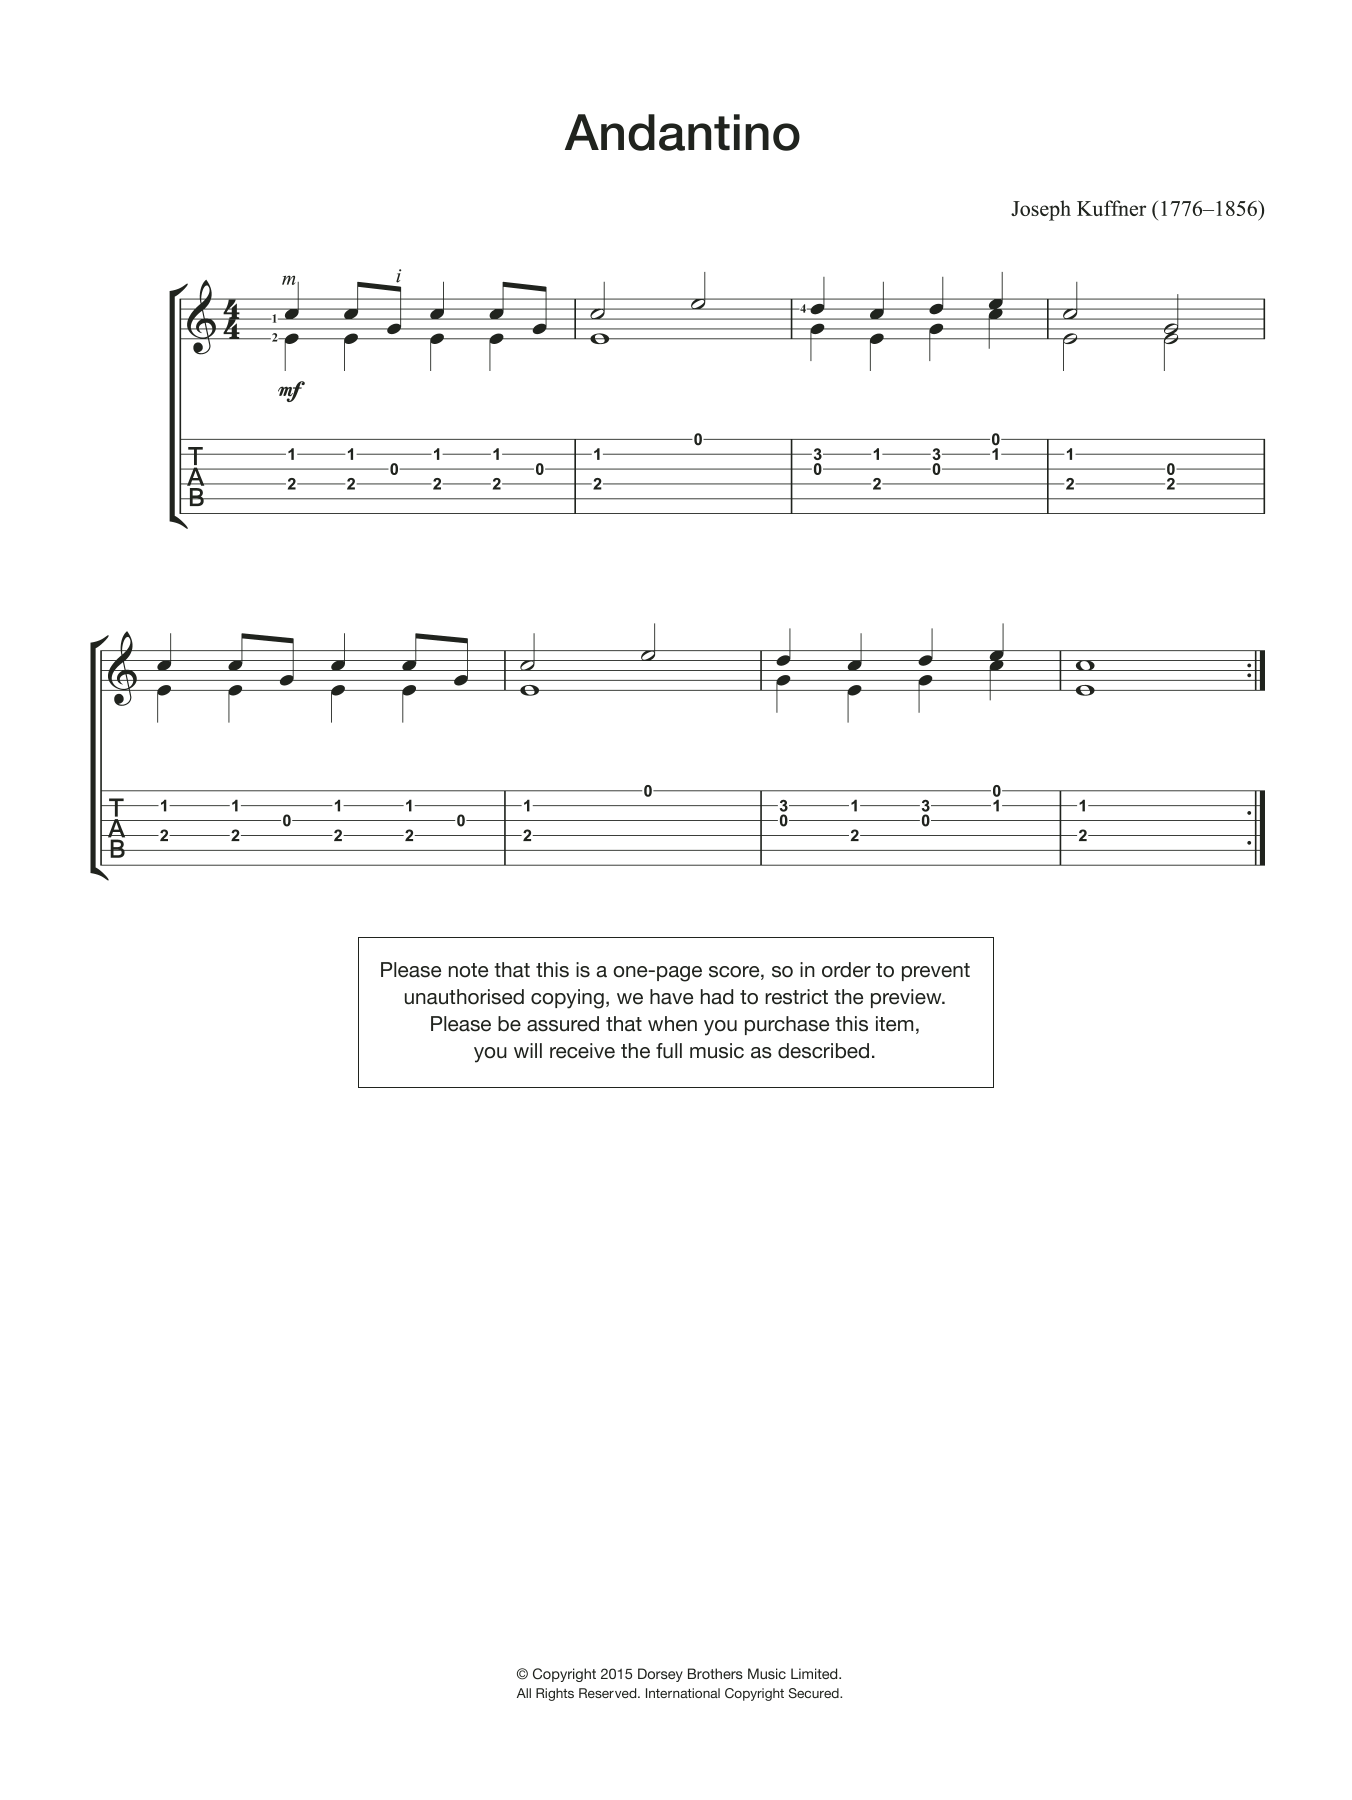 Joseph Kuffner Andantino Sheet Music Notes & Chords for Guitar - Download or Print PDF